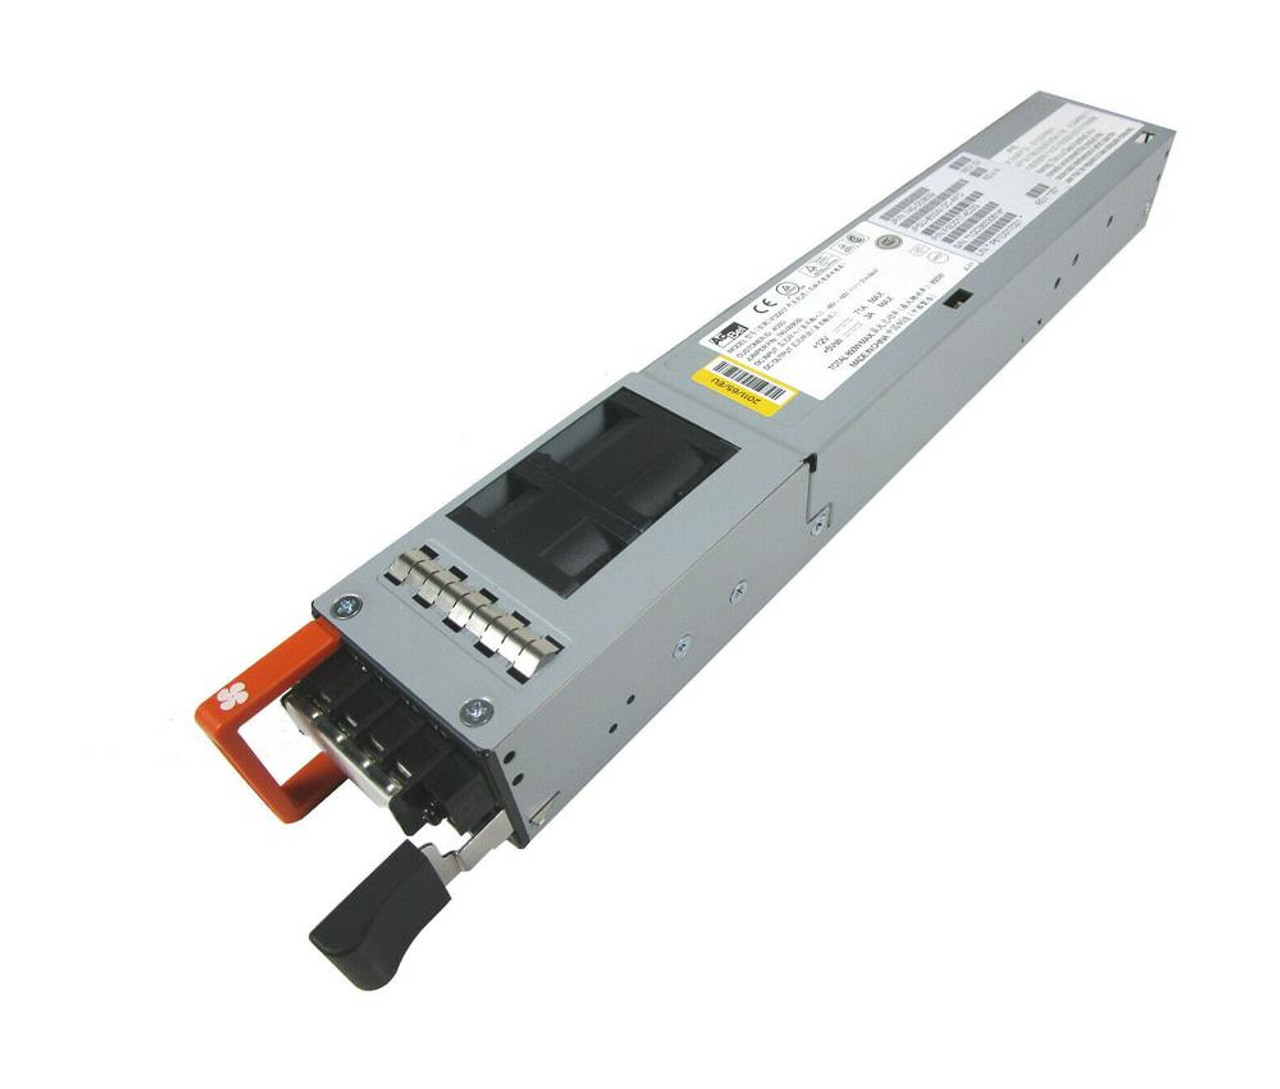 JPSU-850-AC-AFO AC 850-Watts Power Supply for QFX5100-96S (Refurbished)